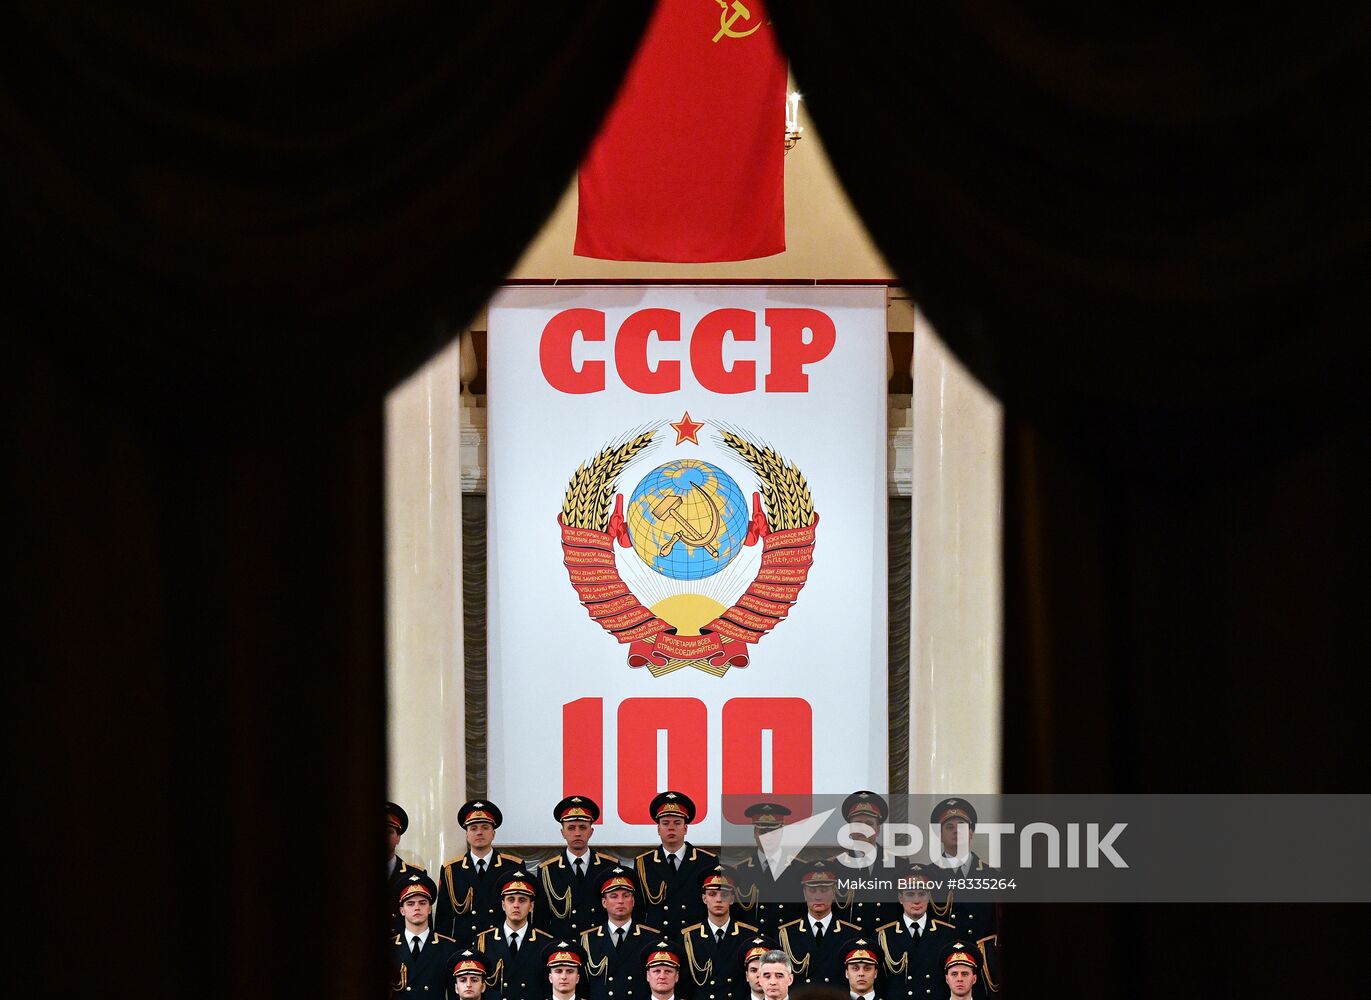 Russia USSR Foundation Centenary